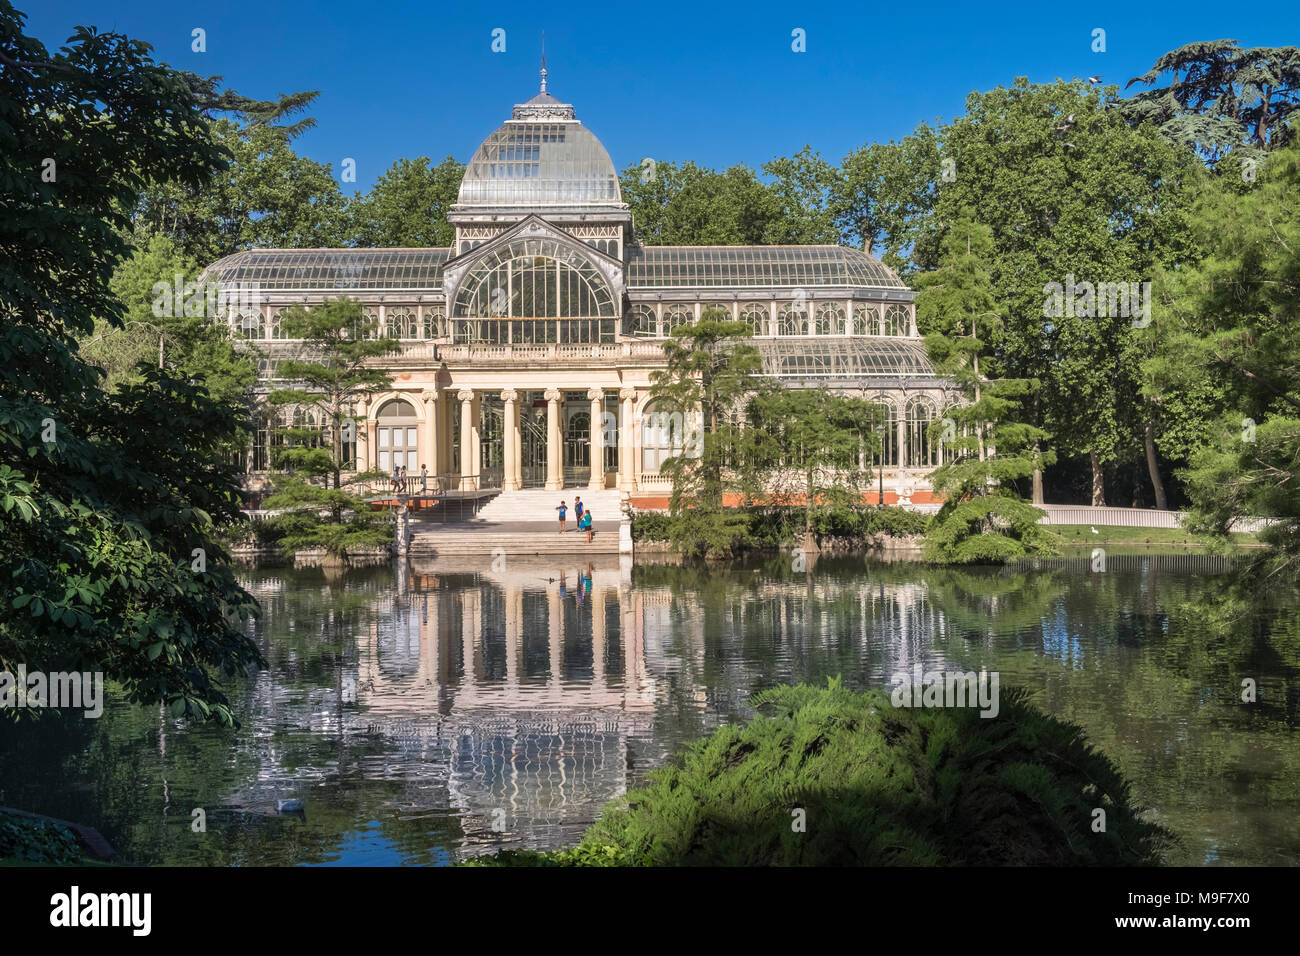 Palacio de Cristal, a glass and metal structure, located in popular attraction Buen Retiro Park, Madrid, Spain Stock Photo